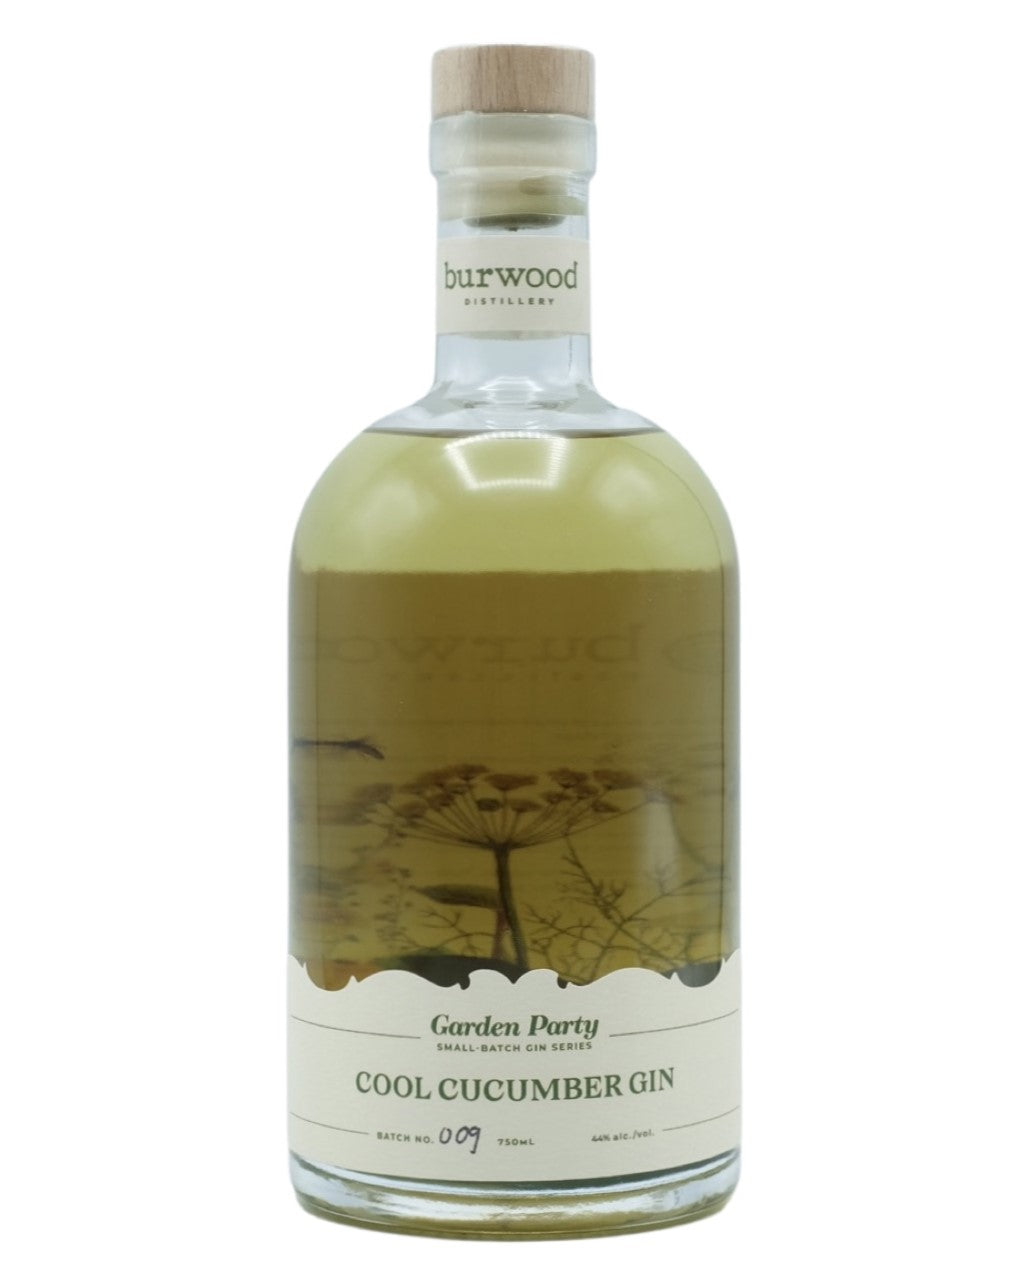 Burwood Cool Cucumber Gin